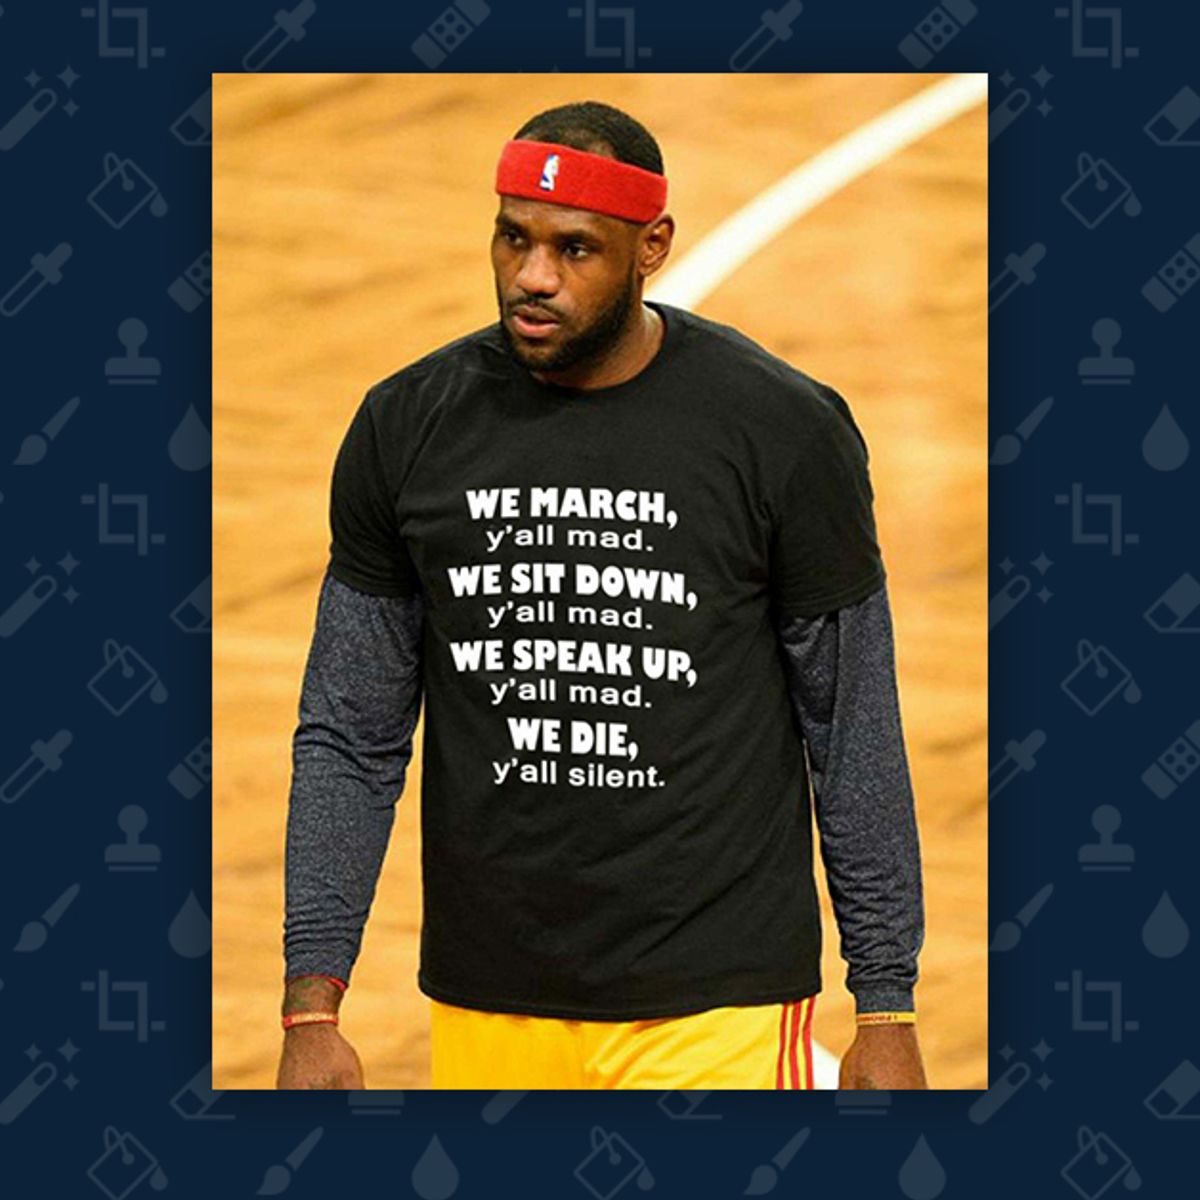 LeBron James Wore a Beautiful Shirt